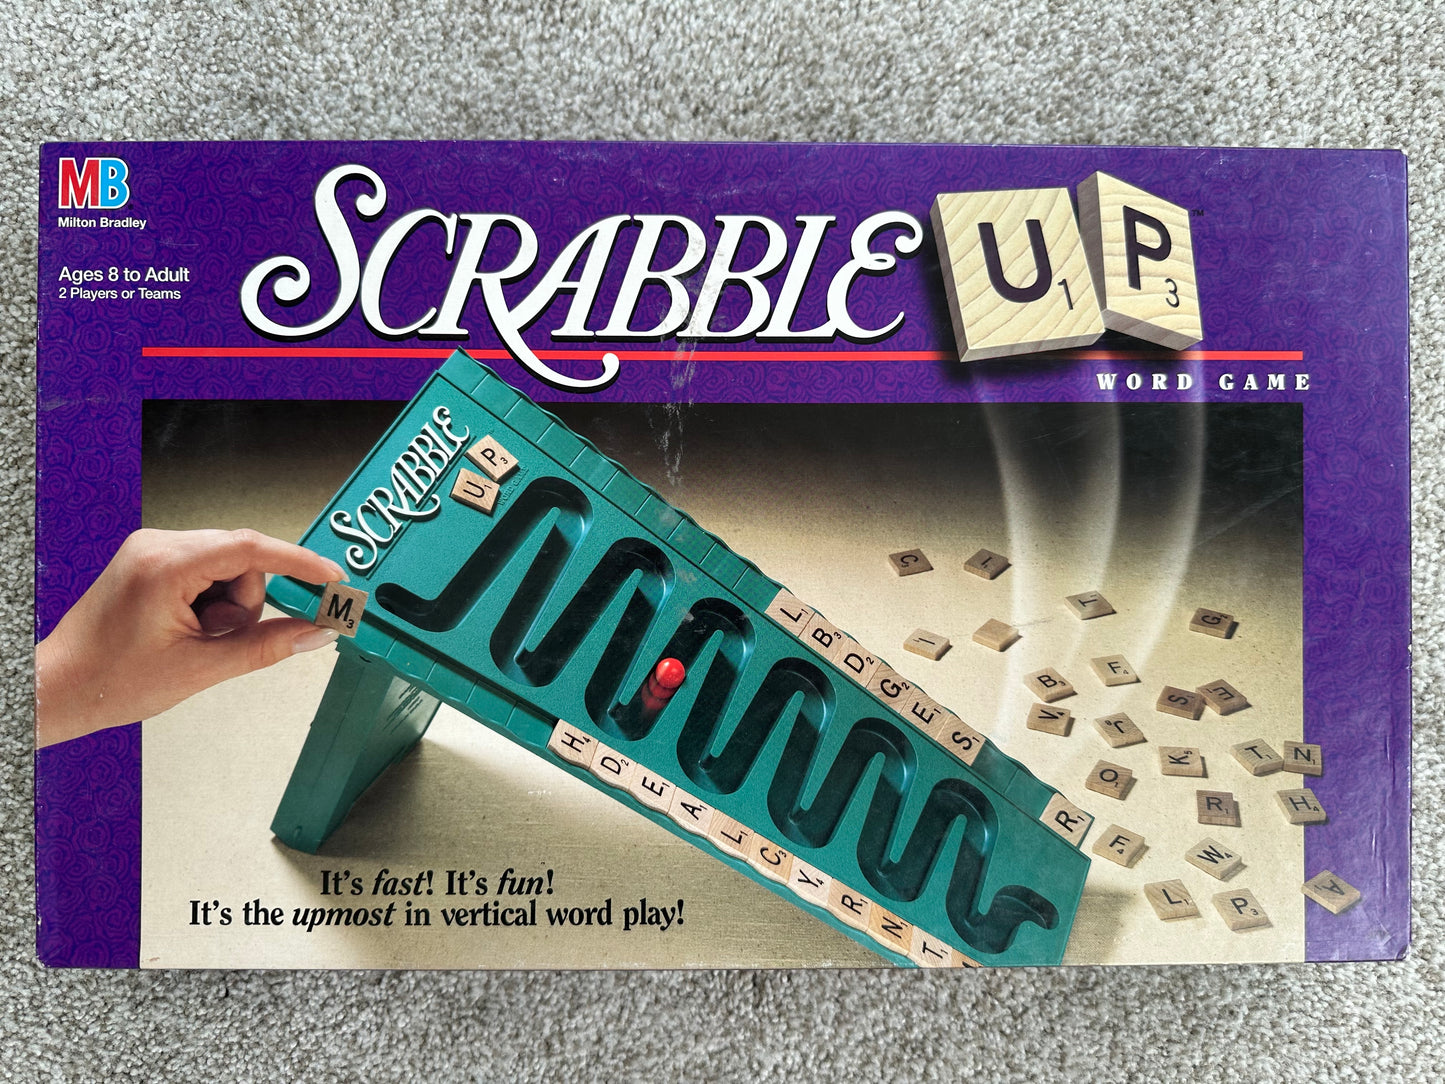 Scrabble Up